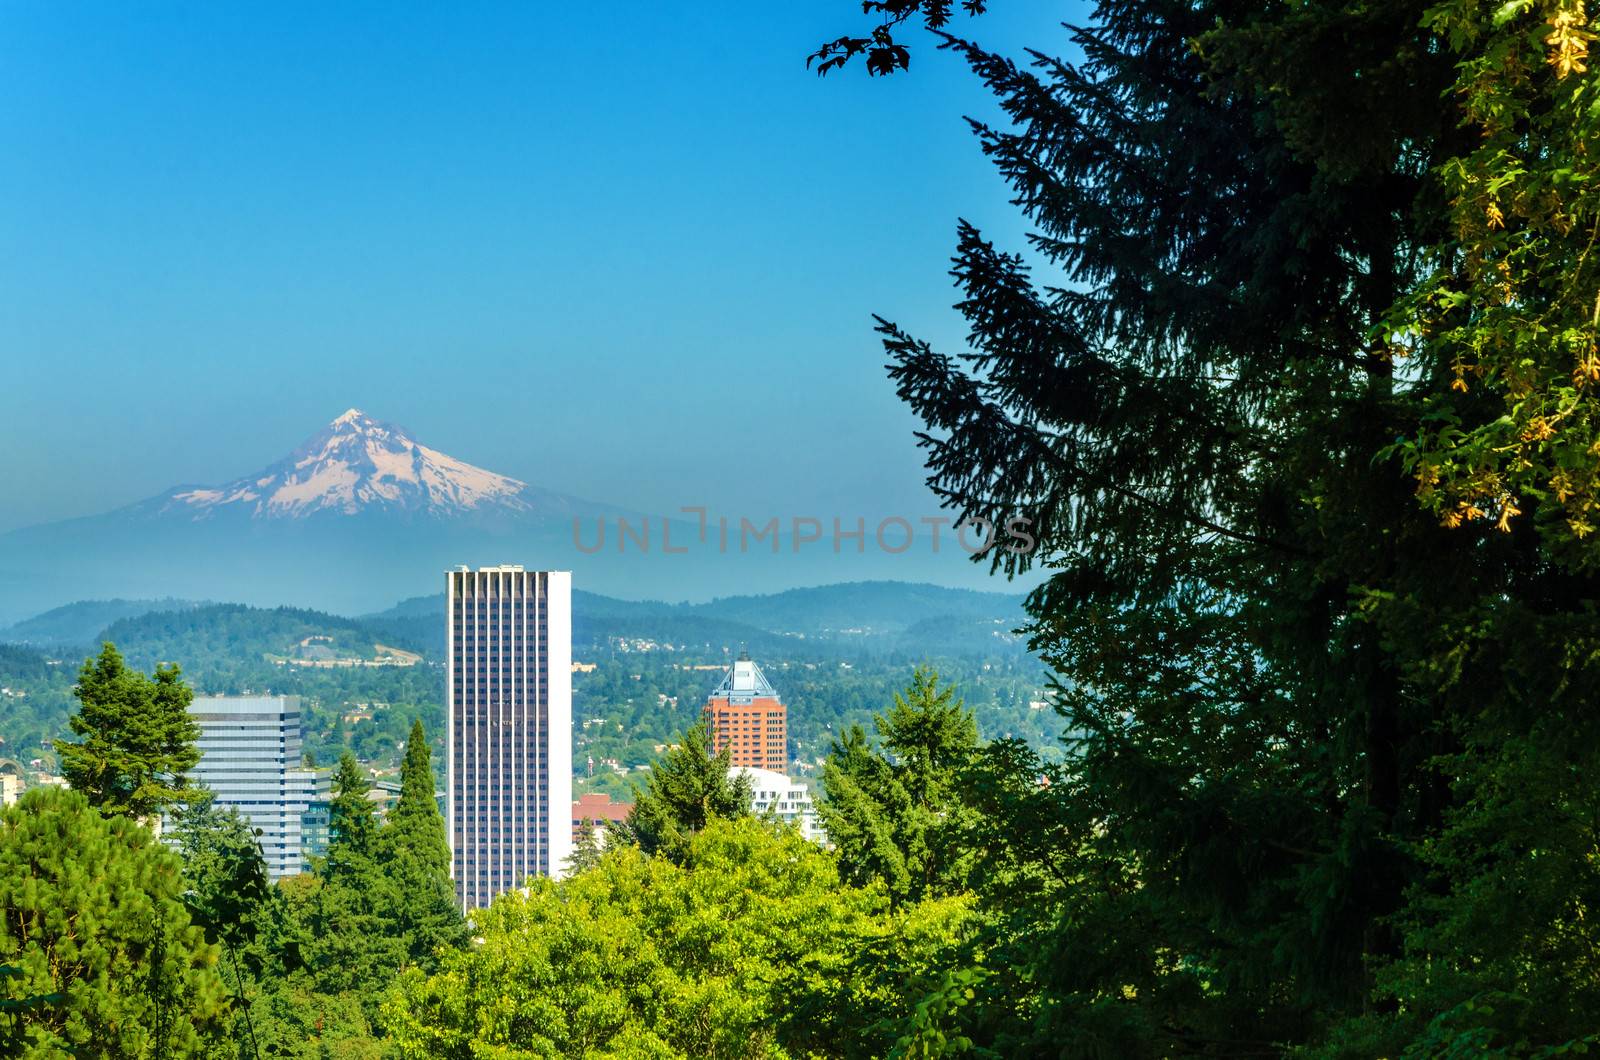 Mount Hood rising above downtown Portland, Oregon